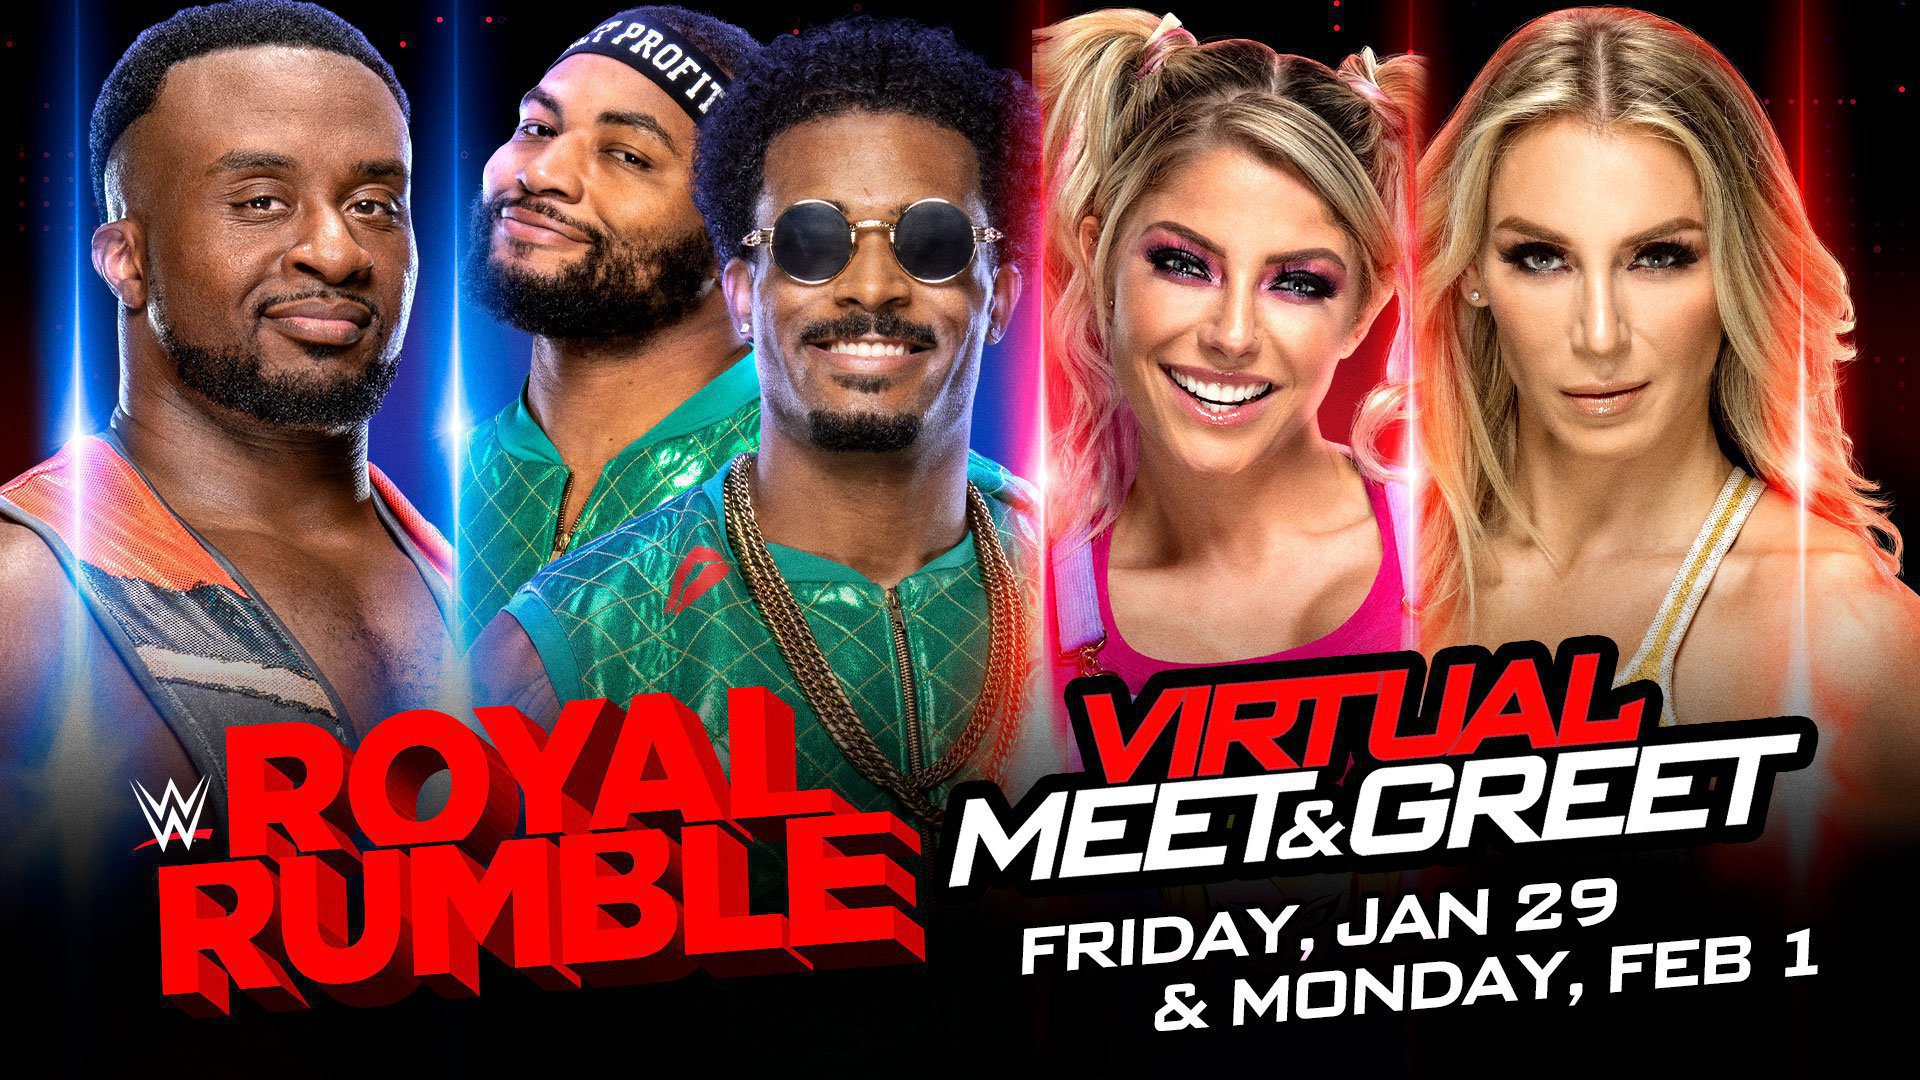 WWE Virtual Meet & Greets to take place around Royal Rumble WWE